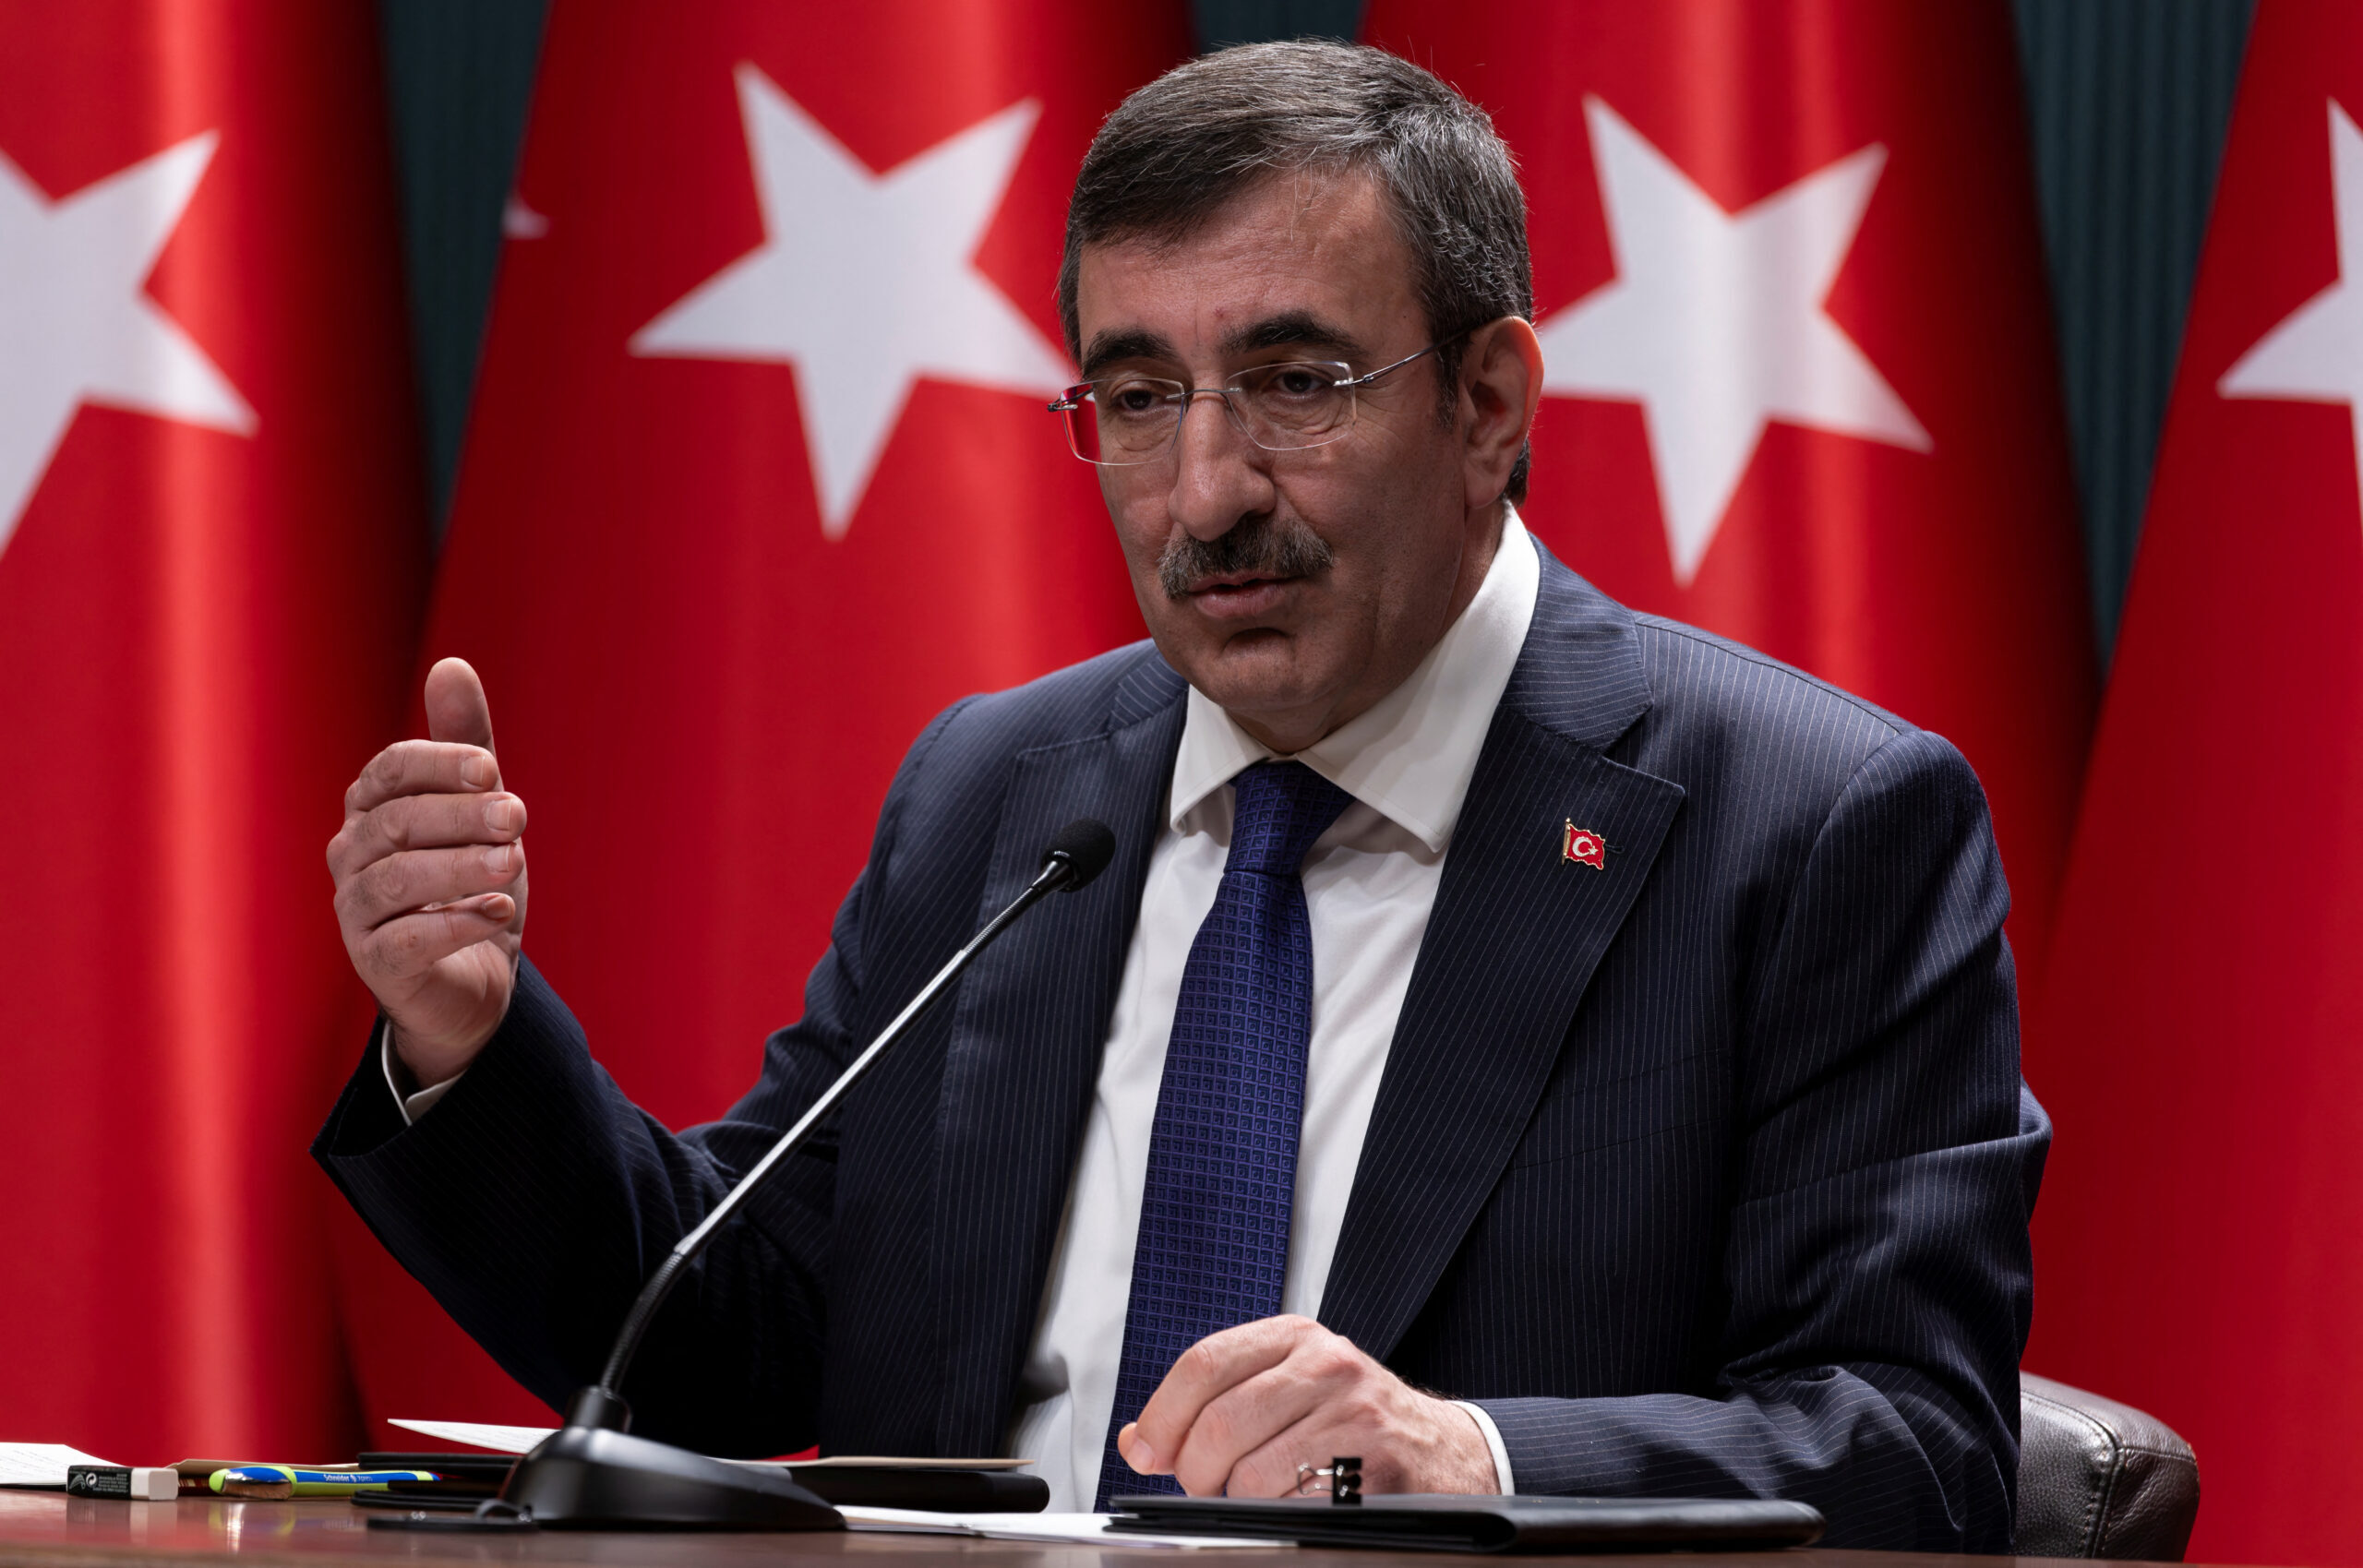 Türkiye targets single-digit inflation by 2026